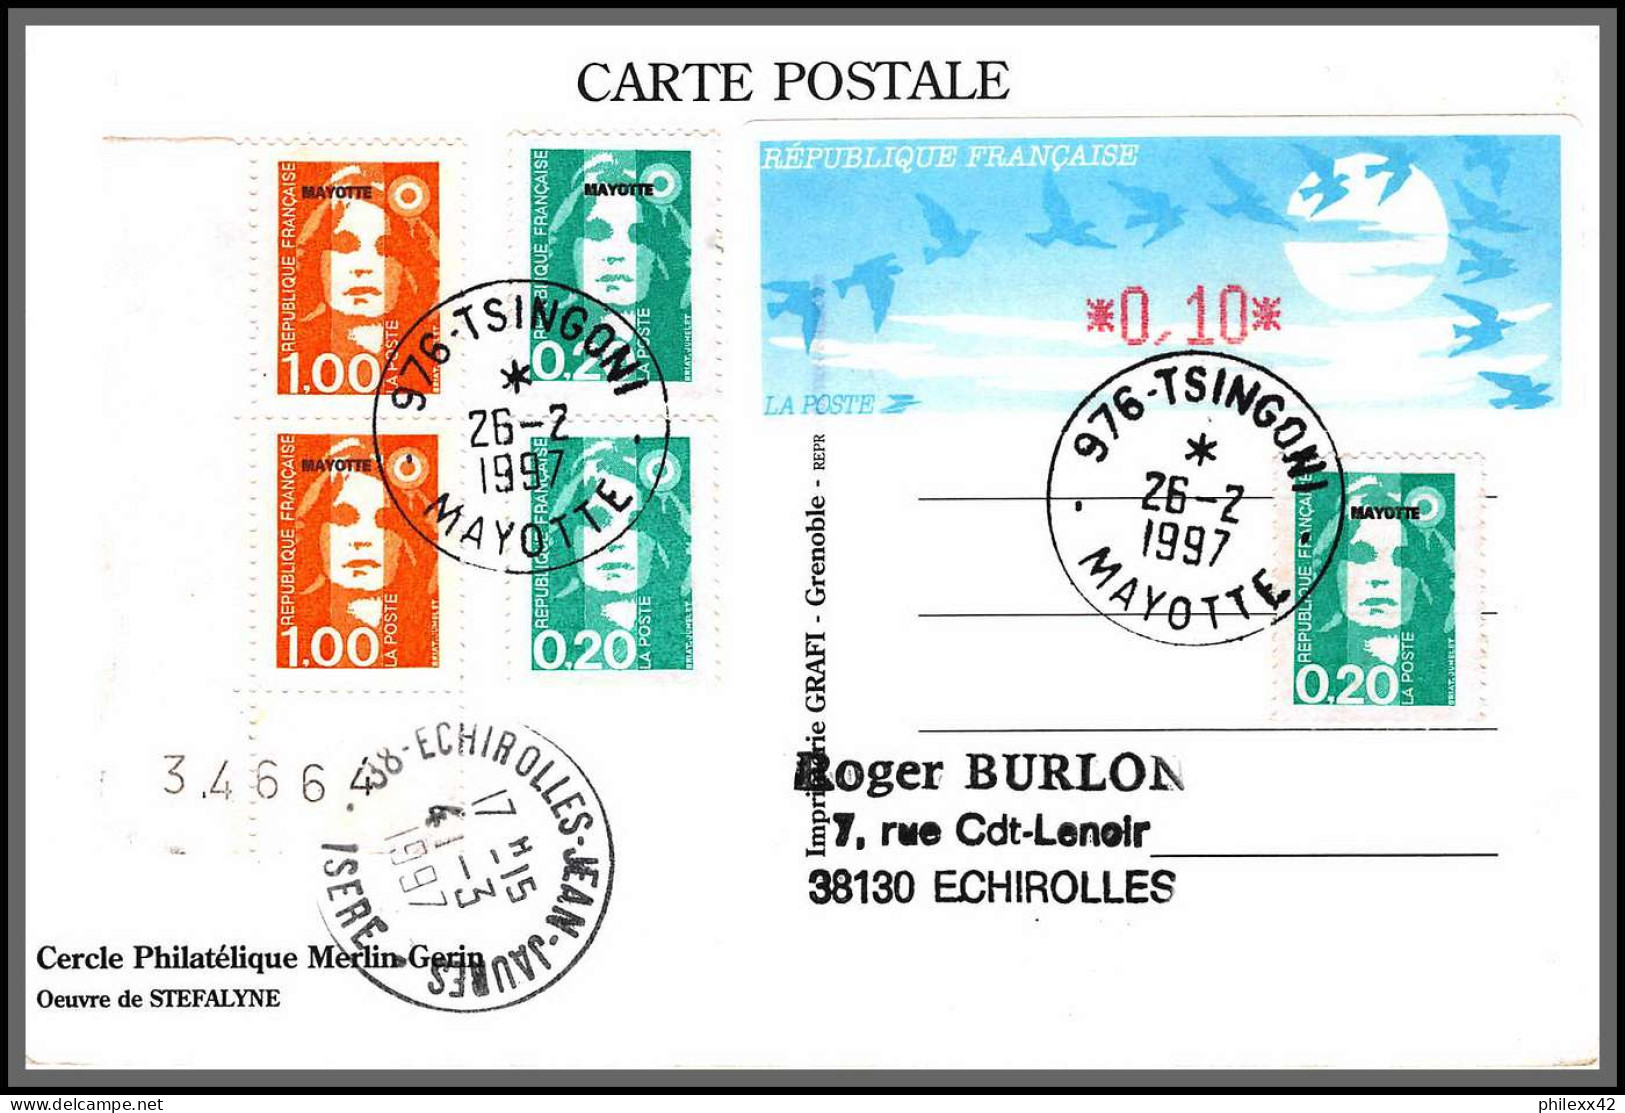 74256 Mixte Atm Briat 26/2/1997 Tsingoni Mayotte Echirolles Isère France Carte Postcard Colonies - Covers & Documents